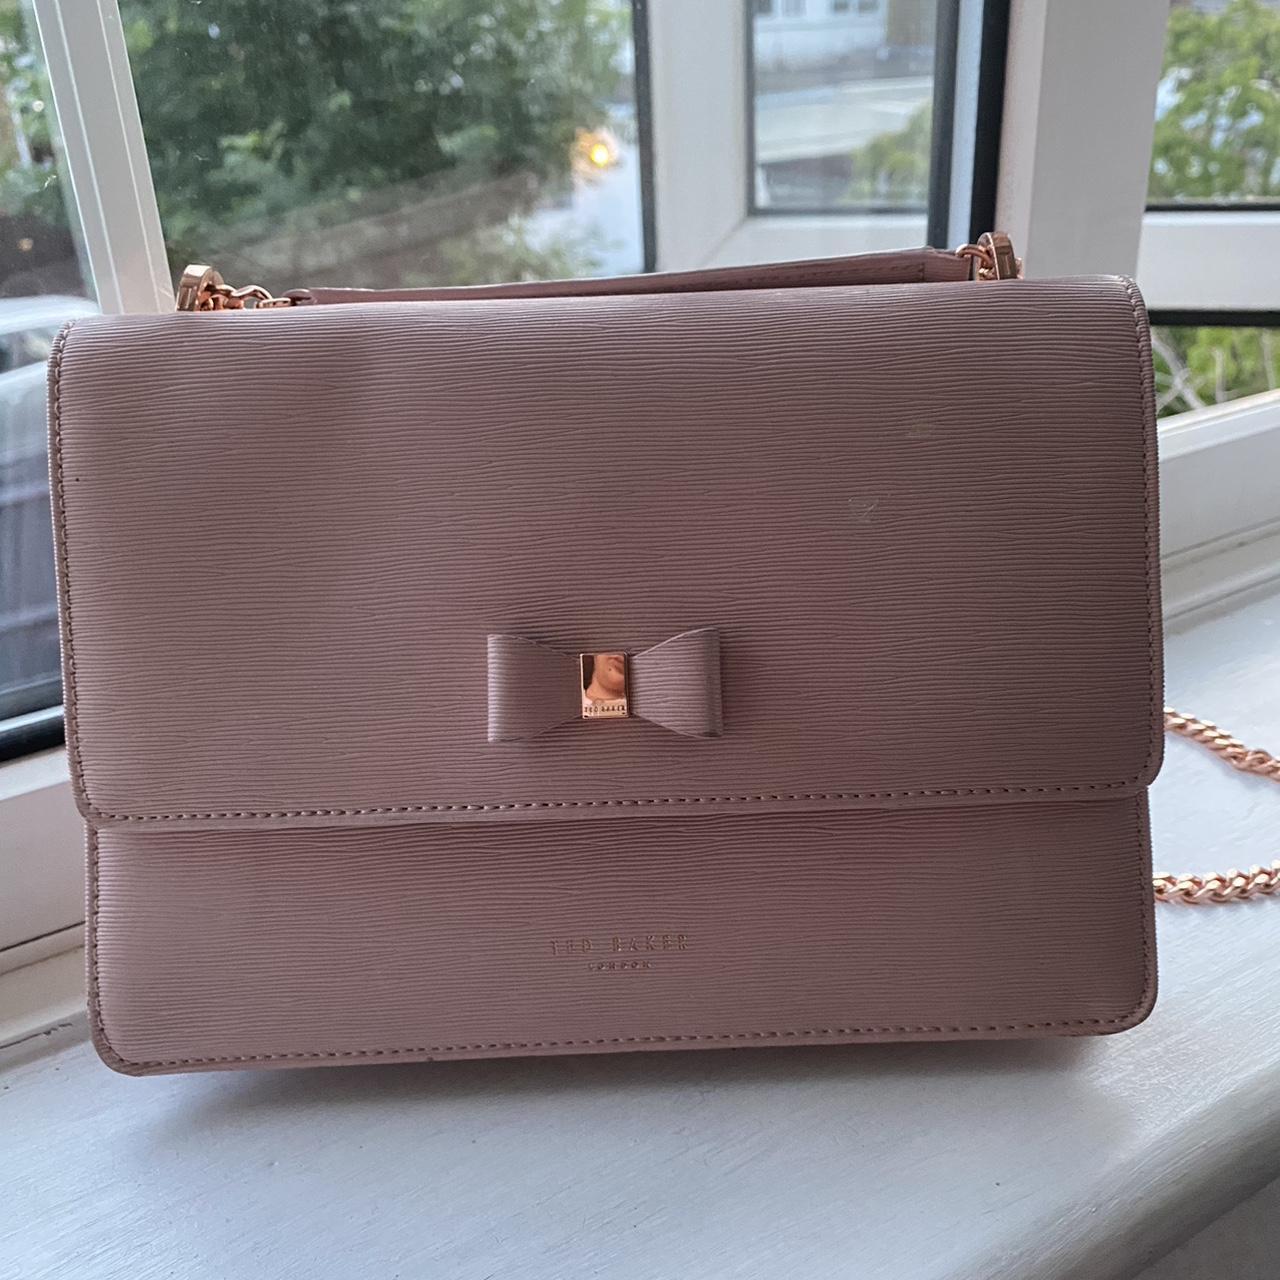 Cute pink ted baked pink handbag Used so a few... - Depop